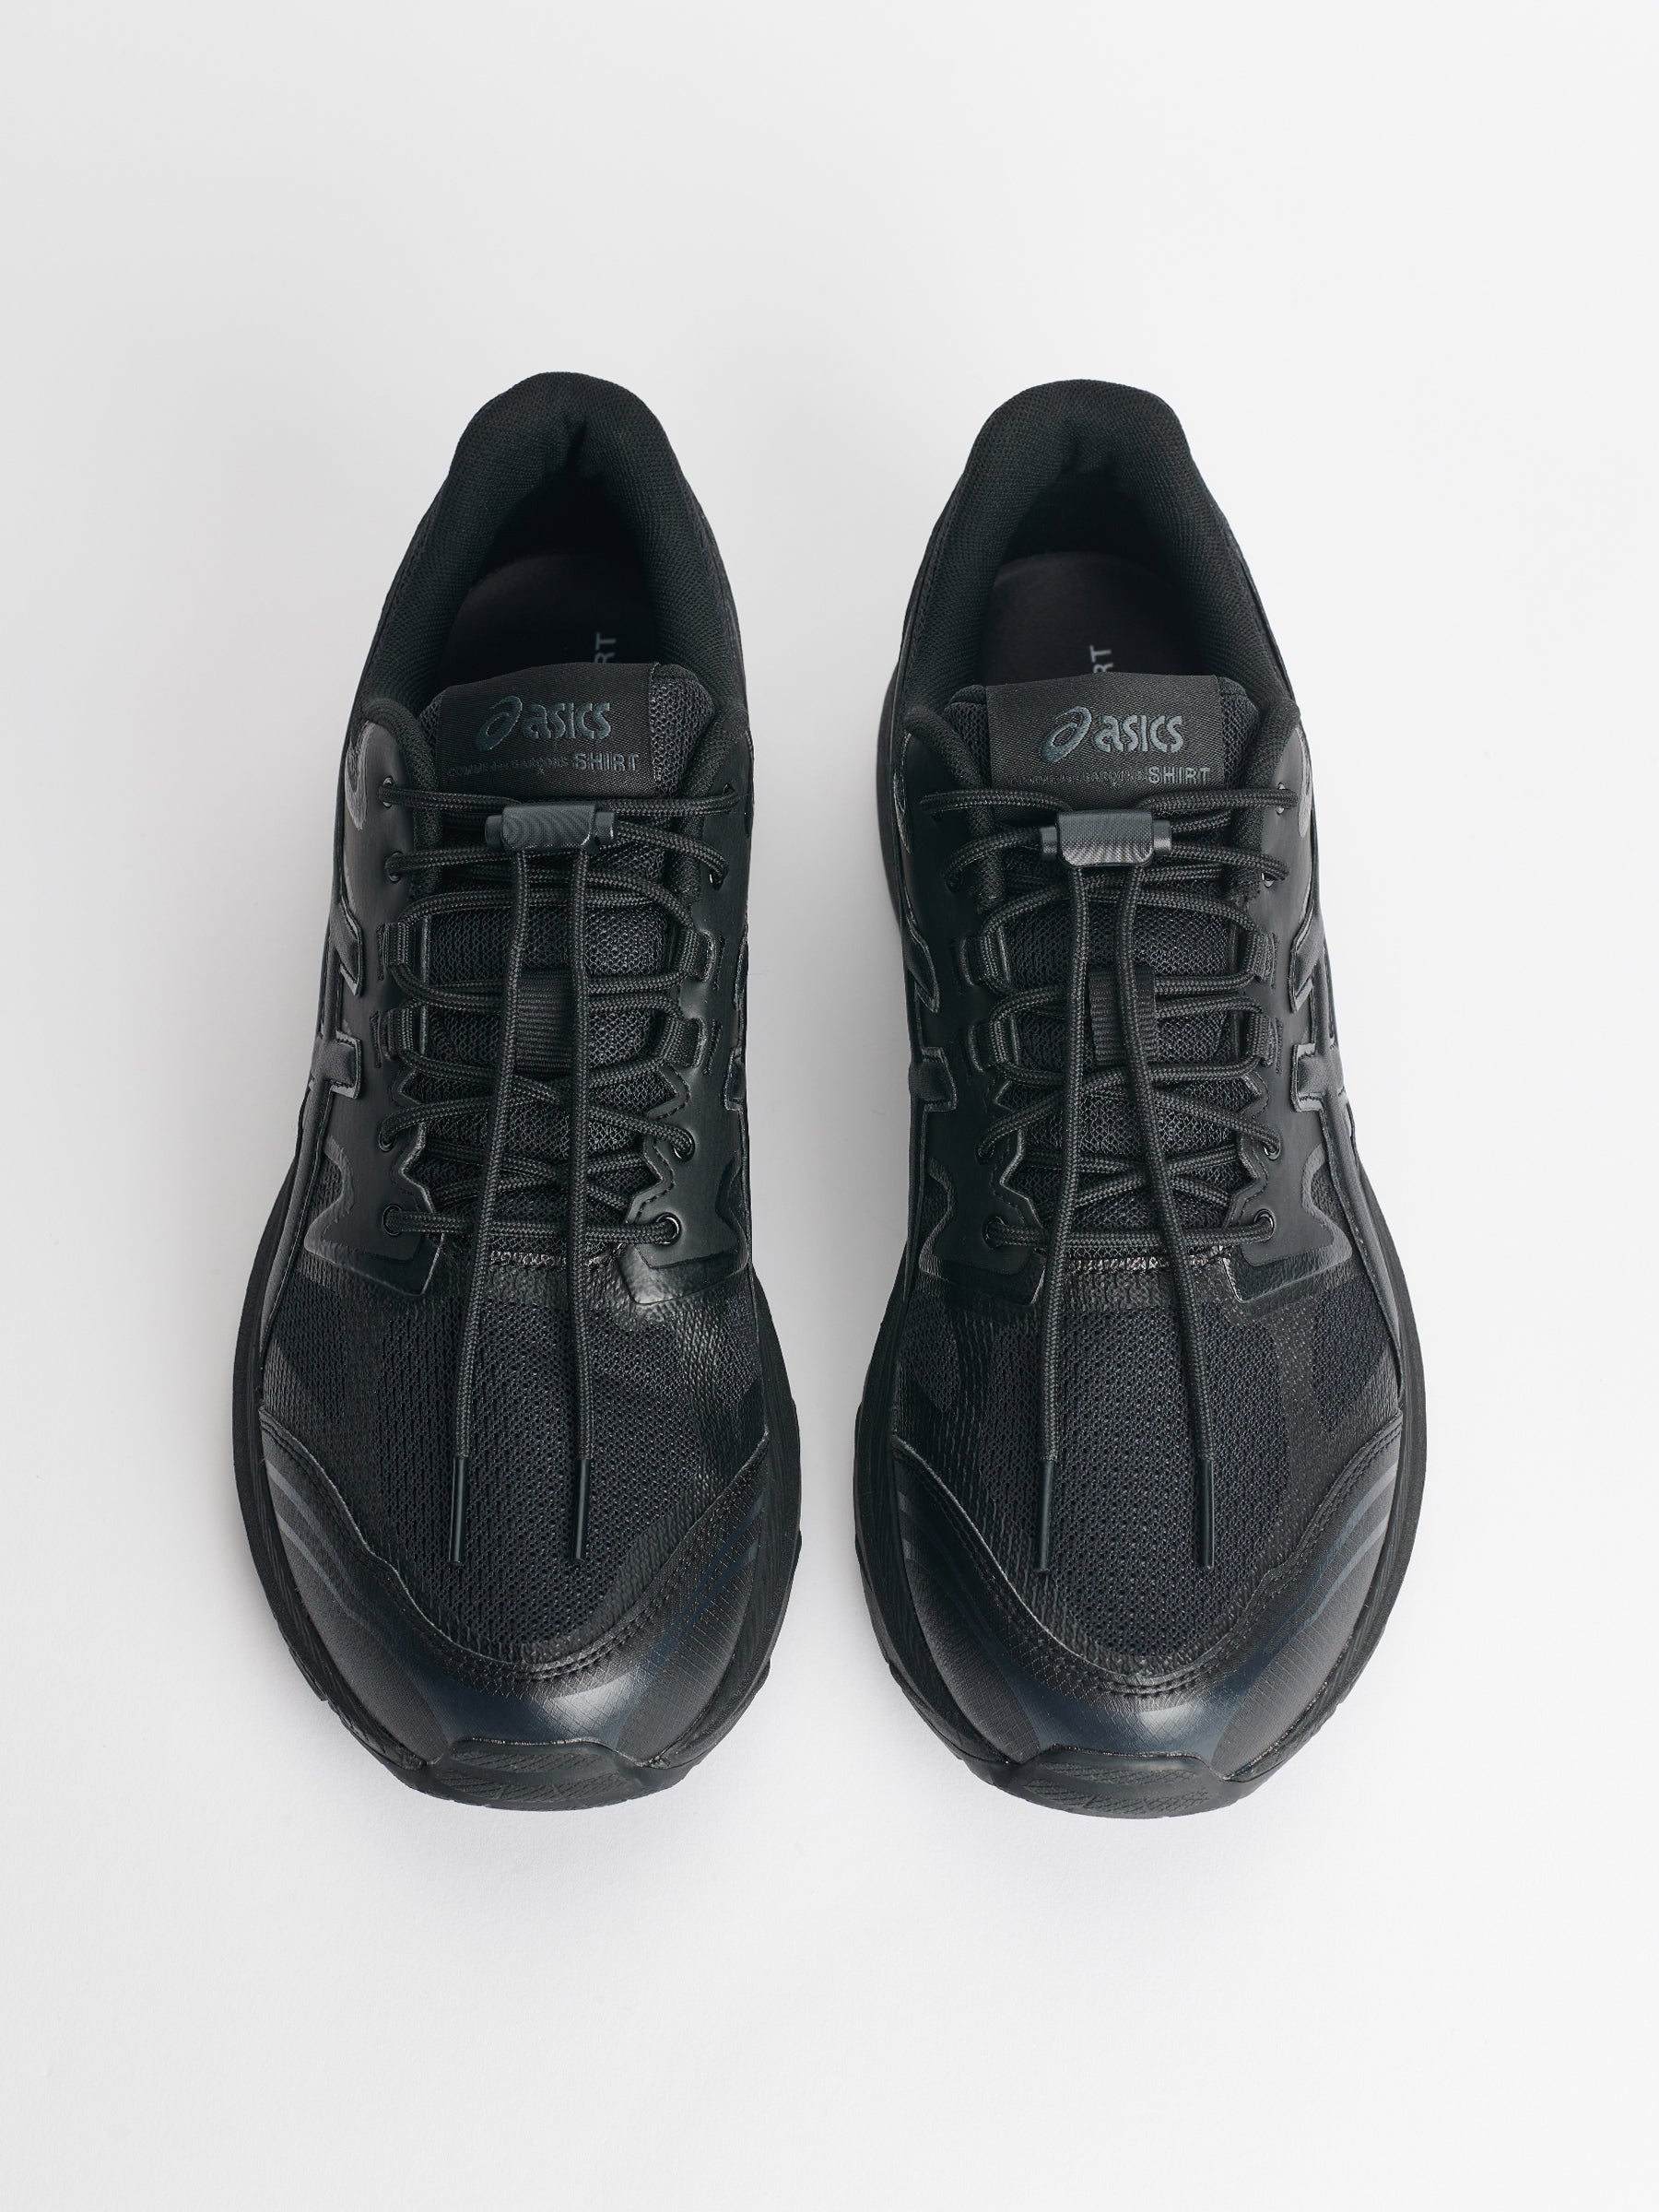 Comme des Garçons Shirt x Asics Gel-Terrain Sneakers Black